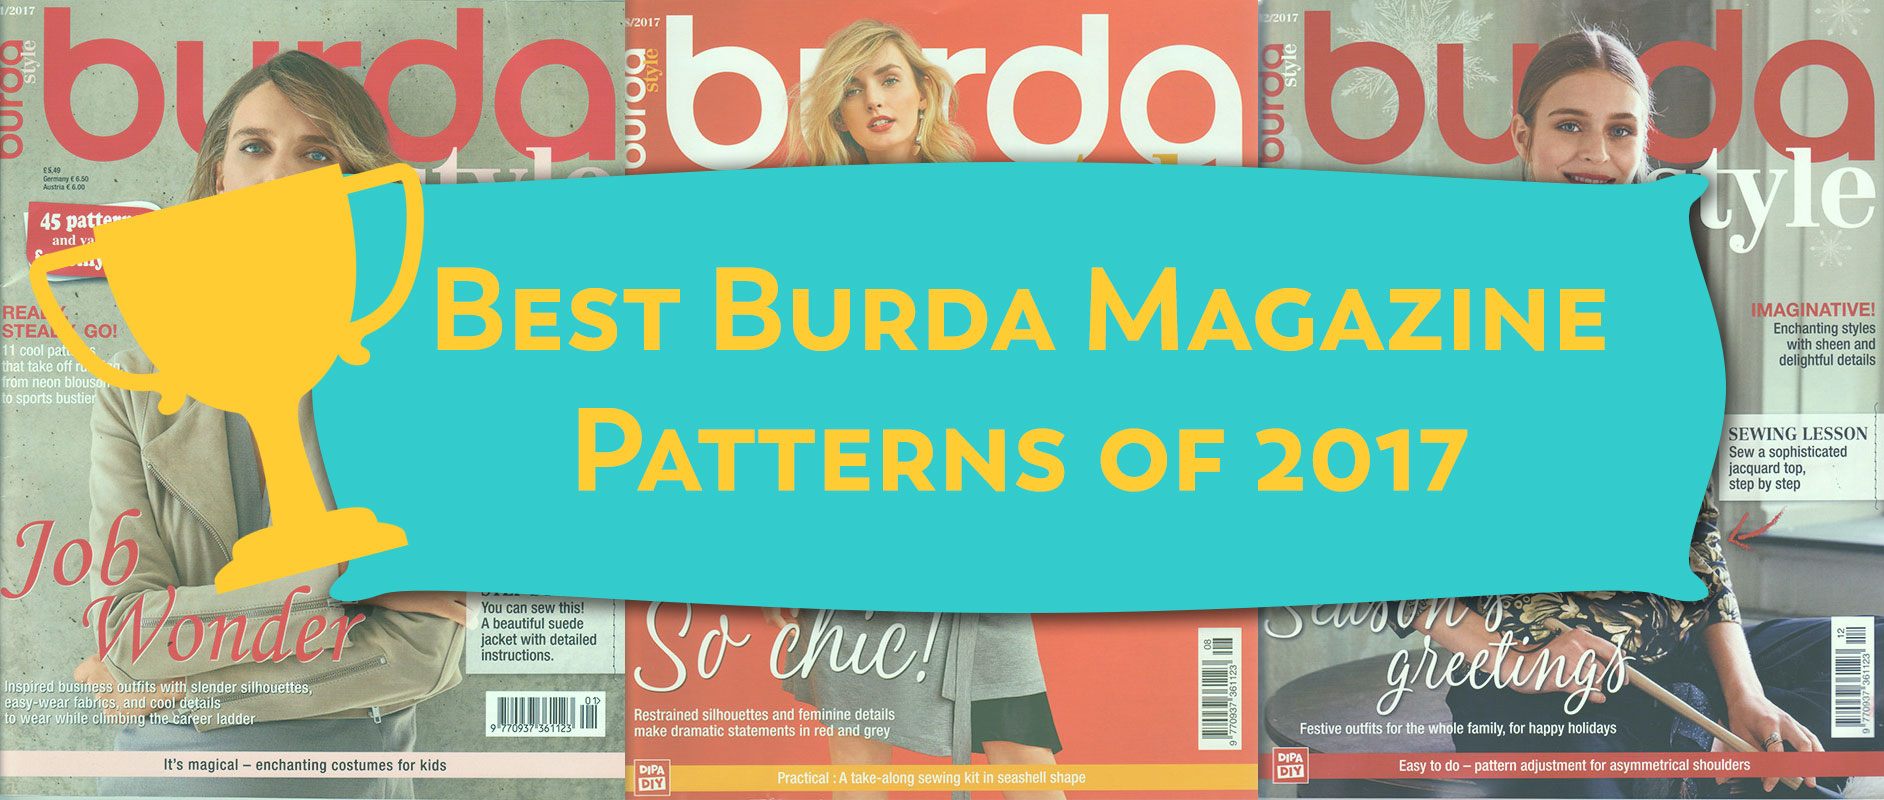 how to use burda magazine patterns